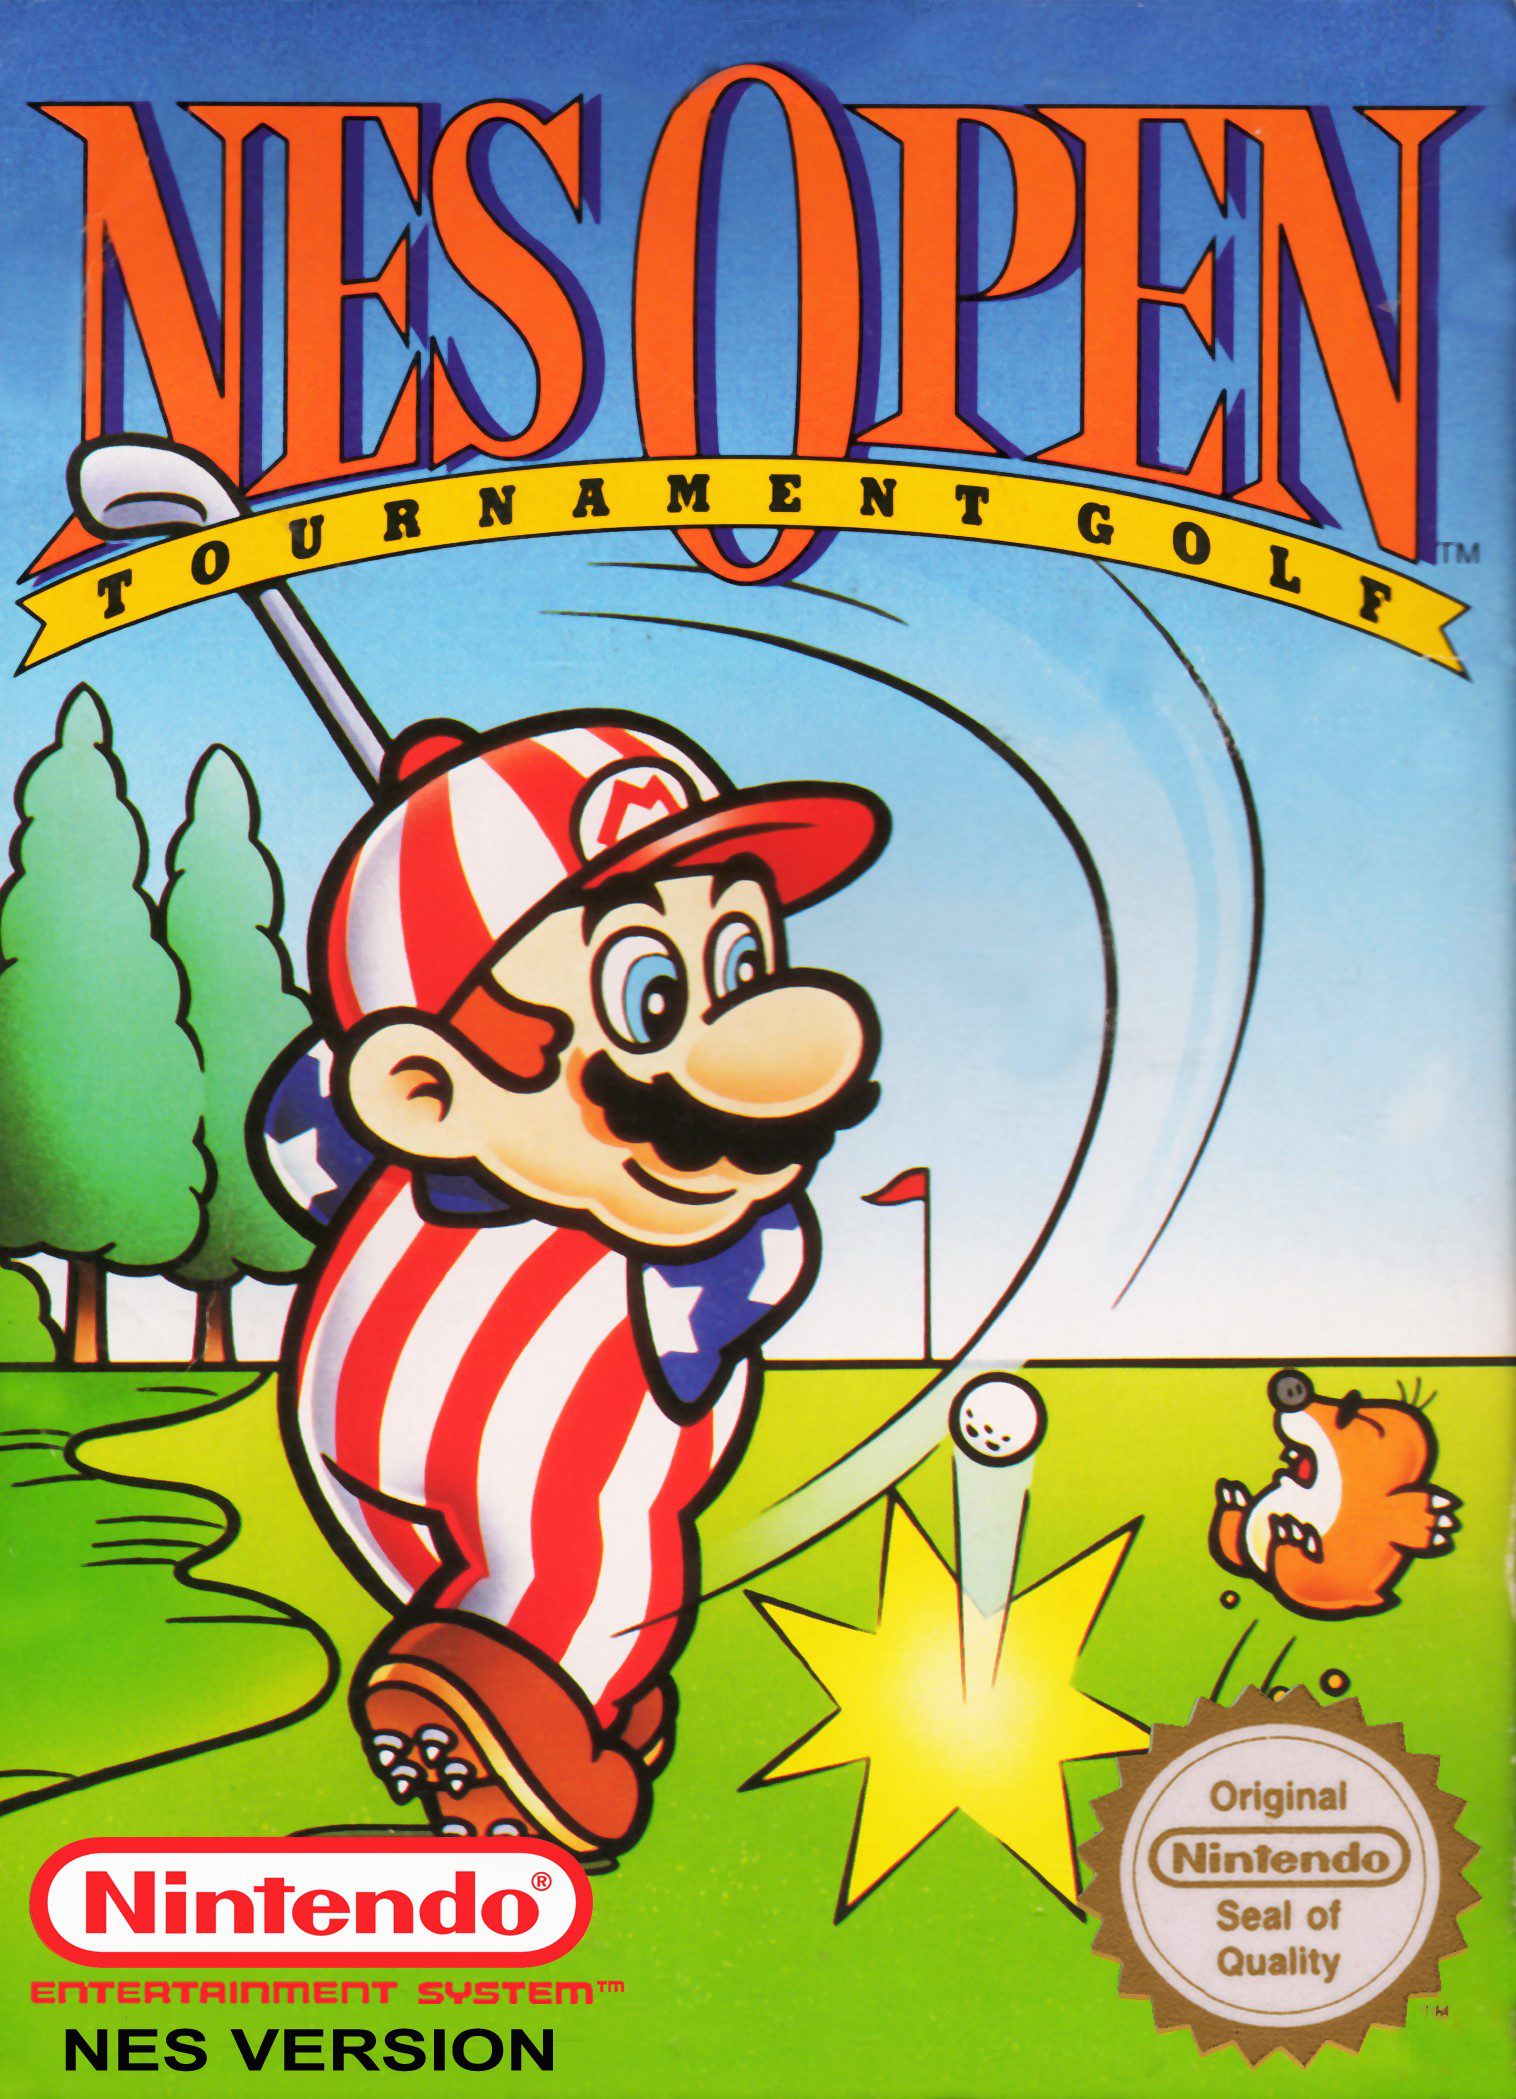 NES Open Tournament Golf for Nintendo Entertainment System (NES)